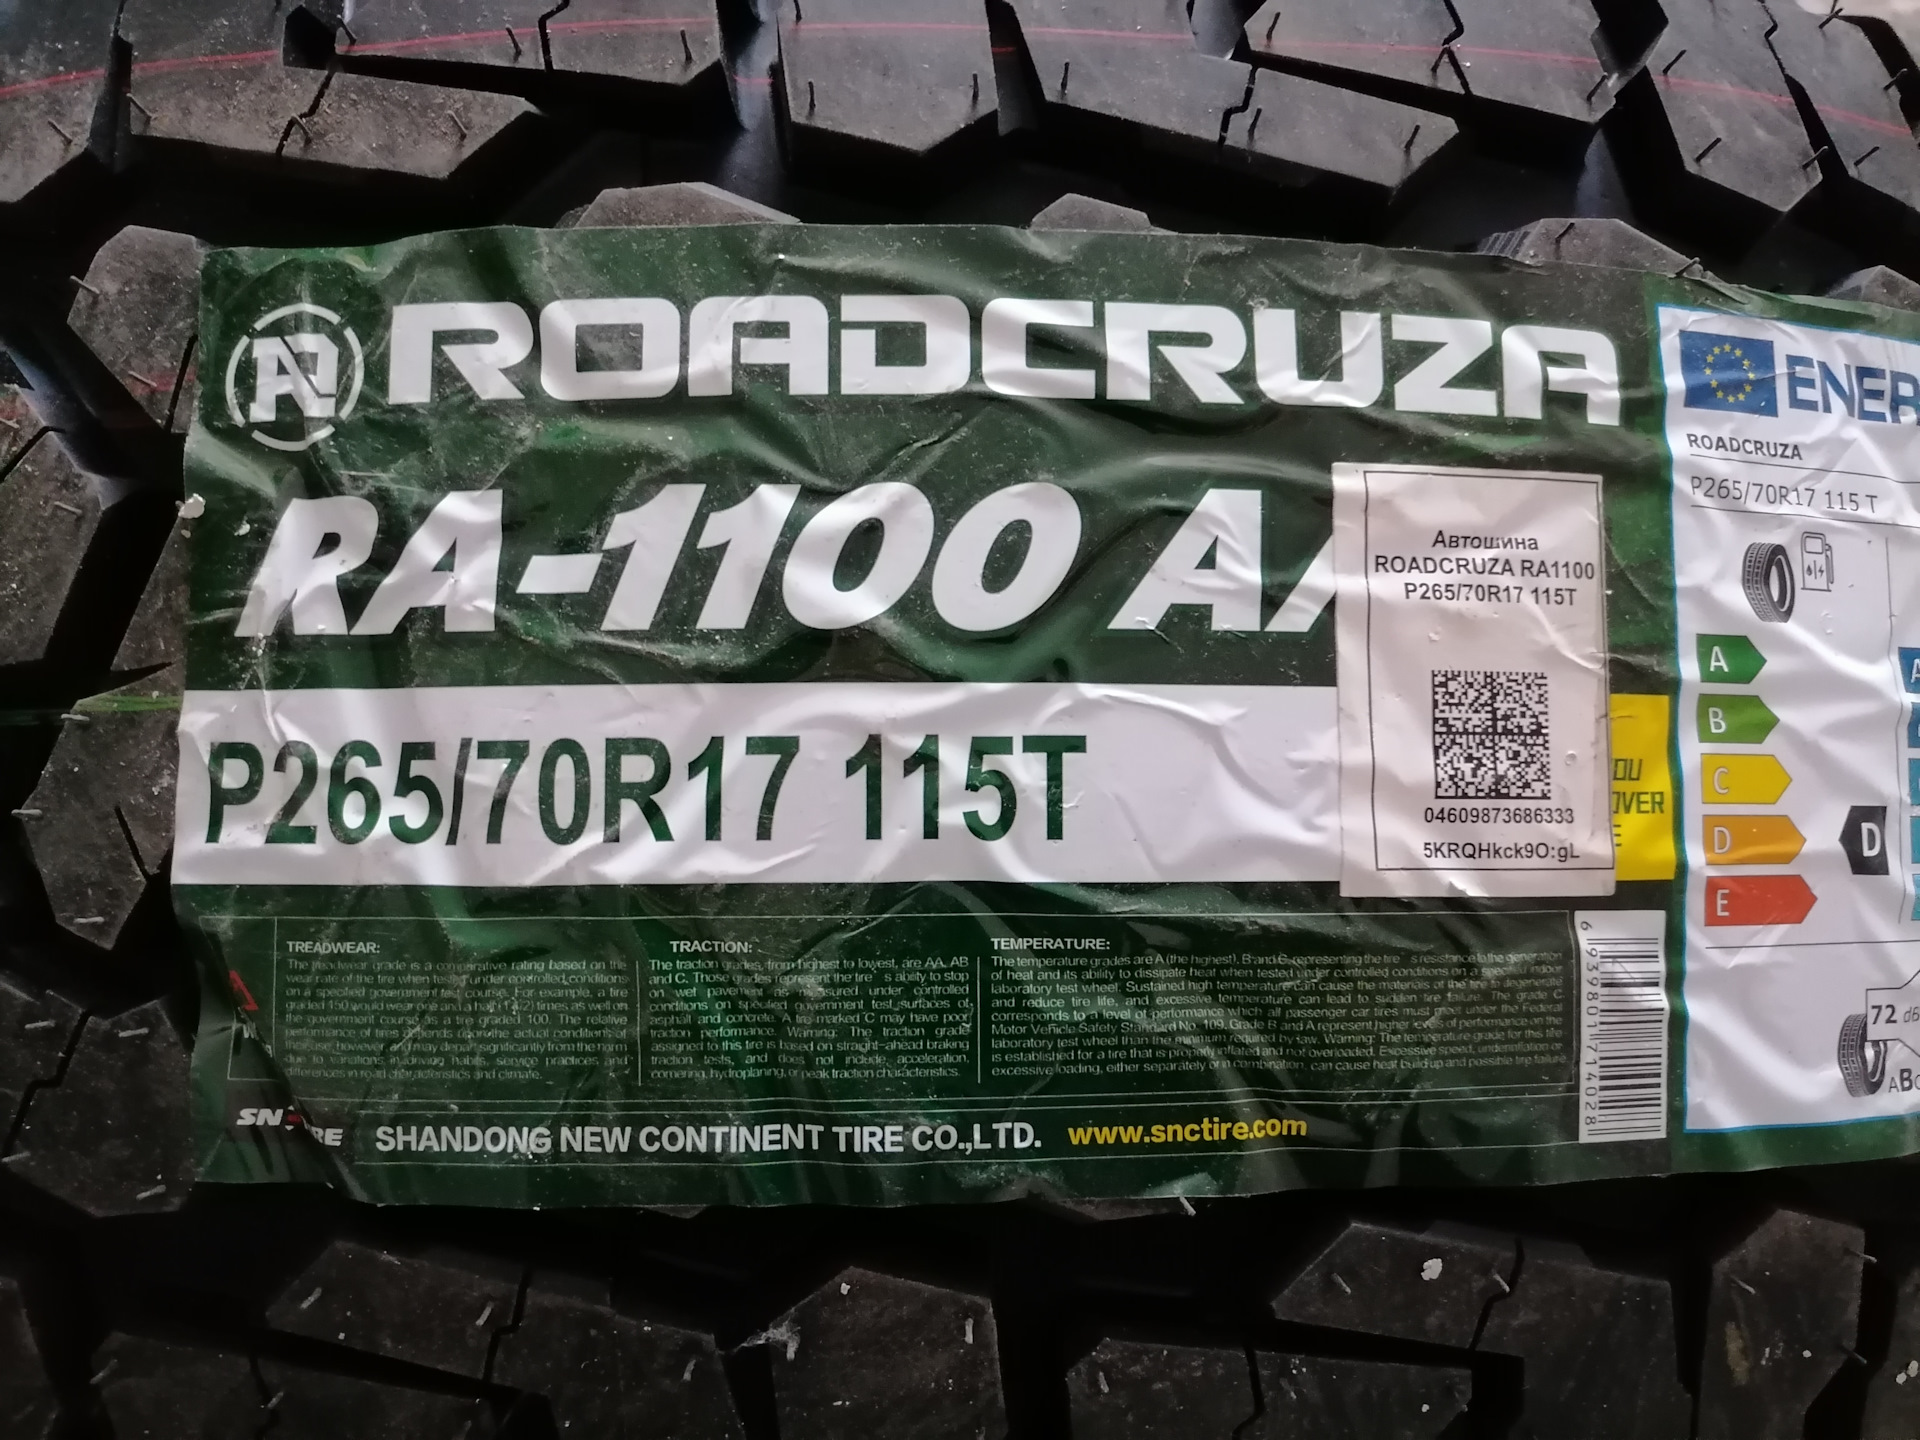 Шины roadcruza ra1100 отзывы. Резина редкруза 1100.